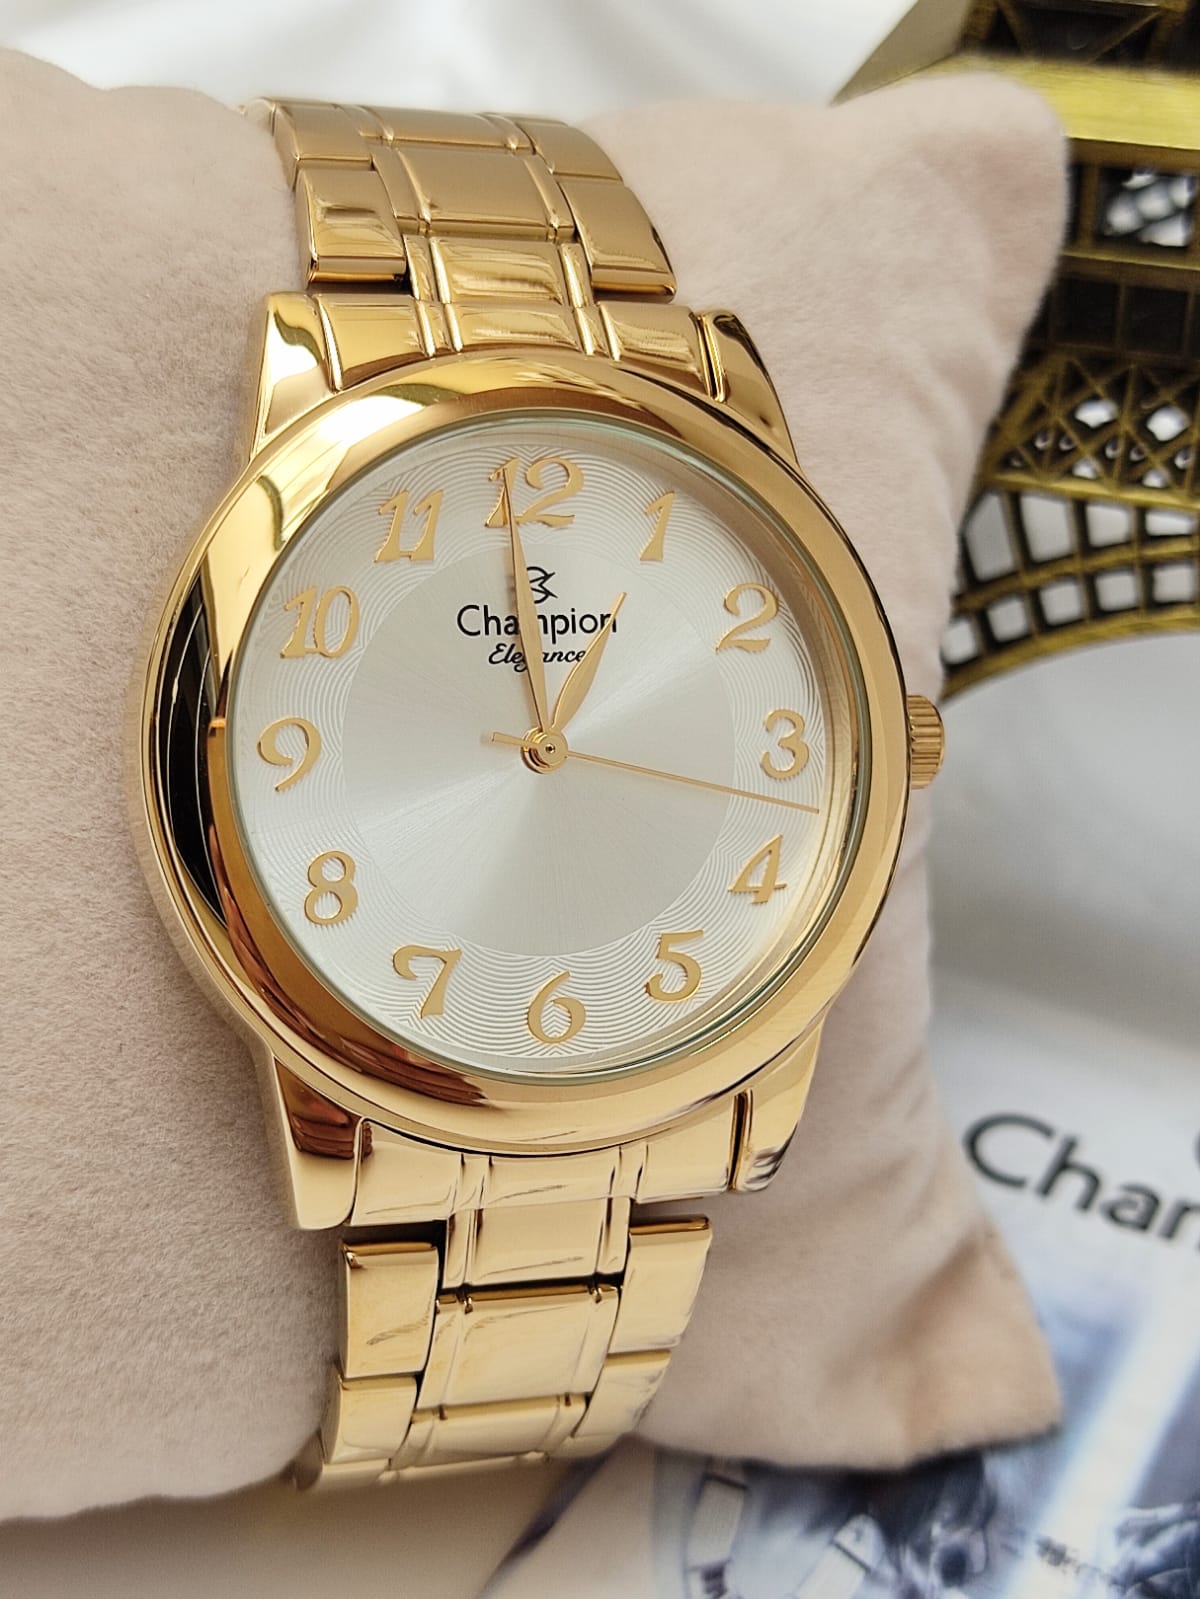 Relógio Champion Feminino CN26804H